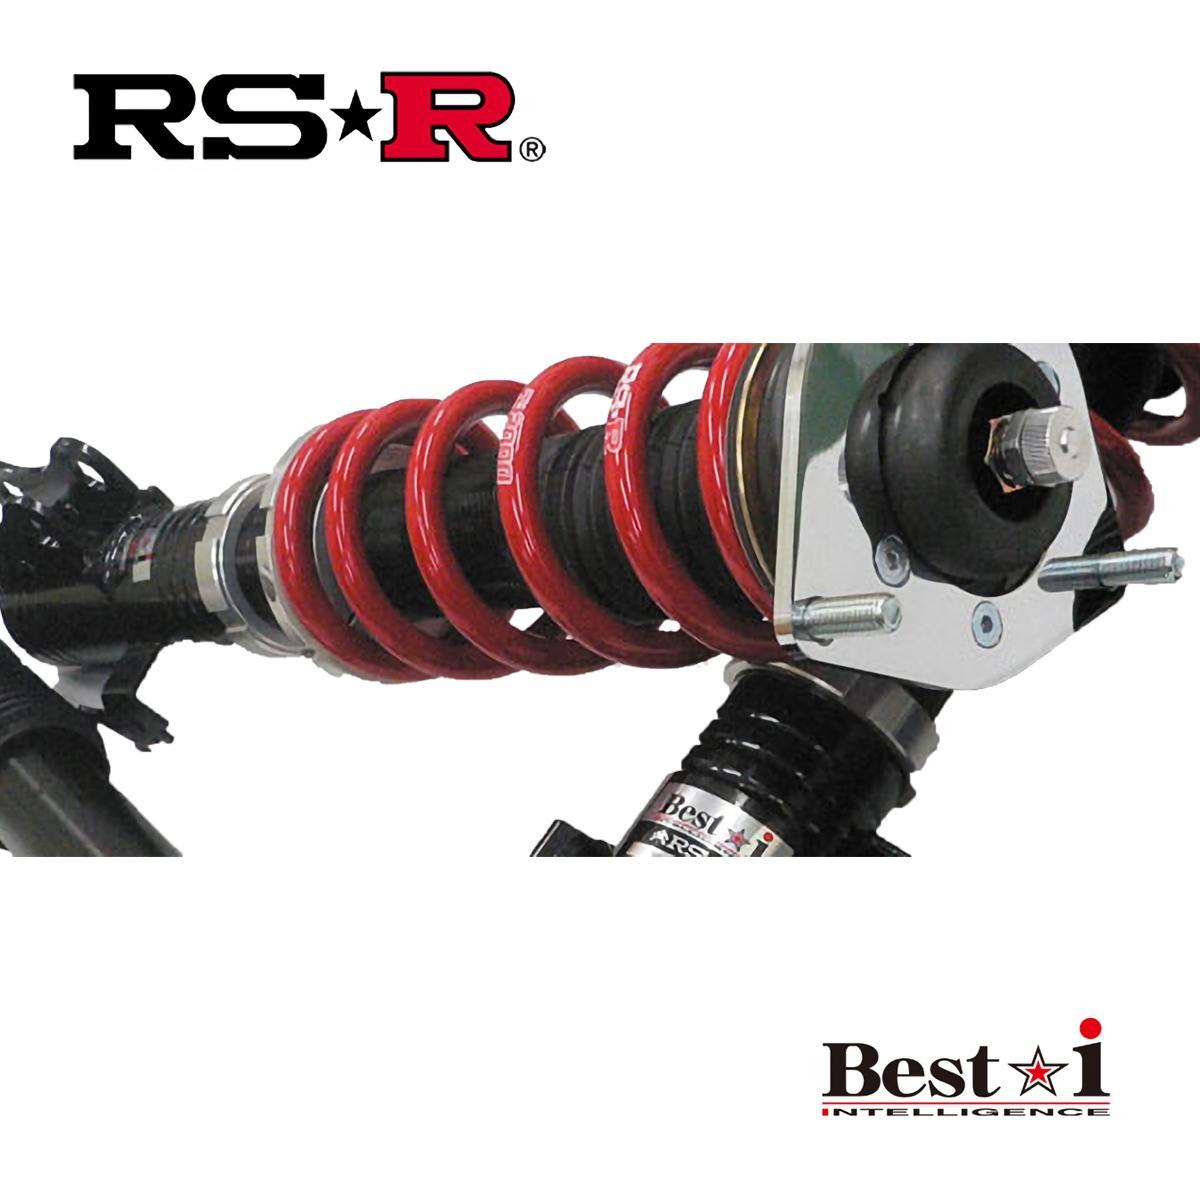 RSR C-HR NGX10 車高調 リア車高調整:ネジ式/ハードバネレート仕様 BIT382H RS-R Best-i ベストi_画像1